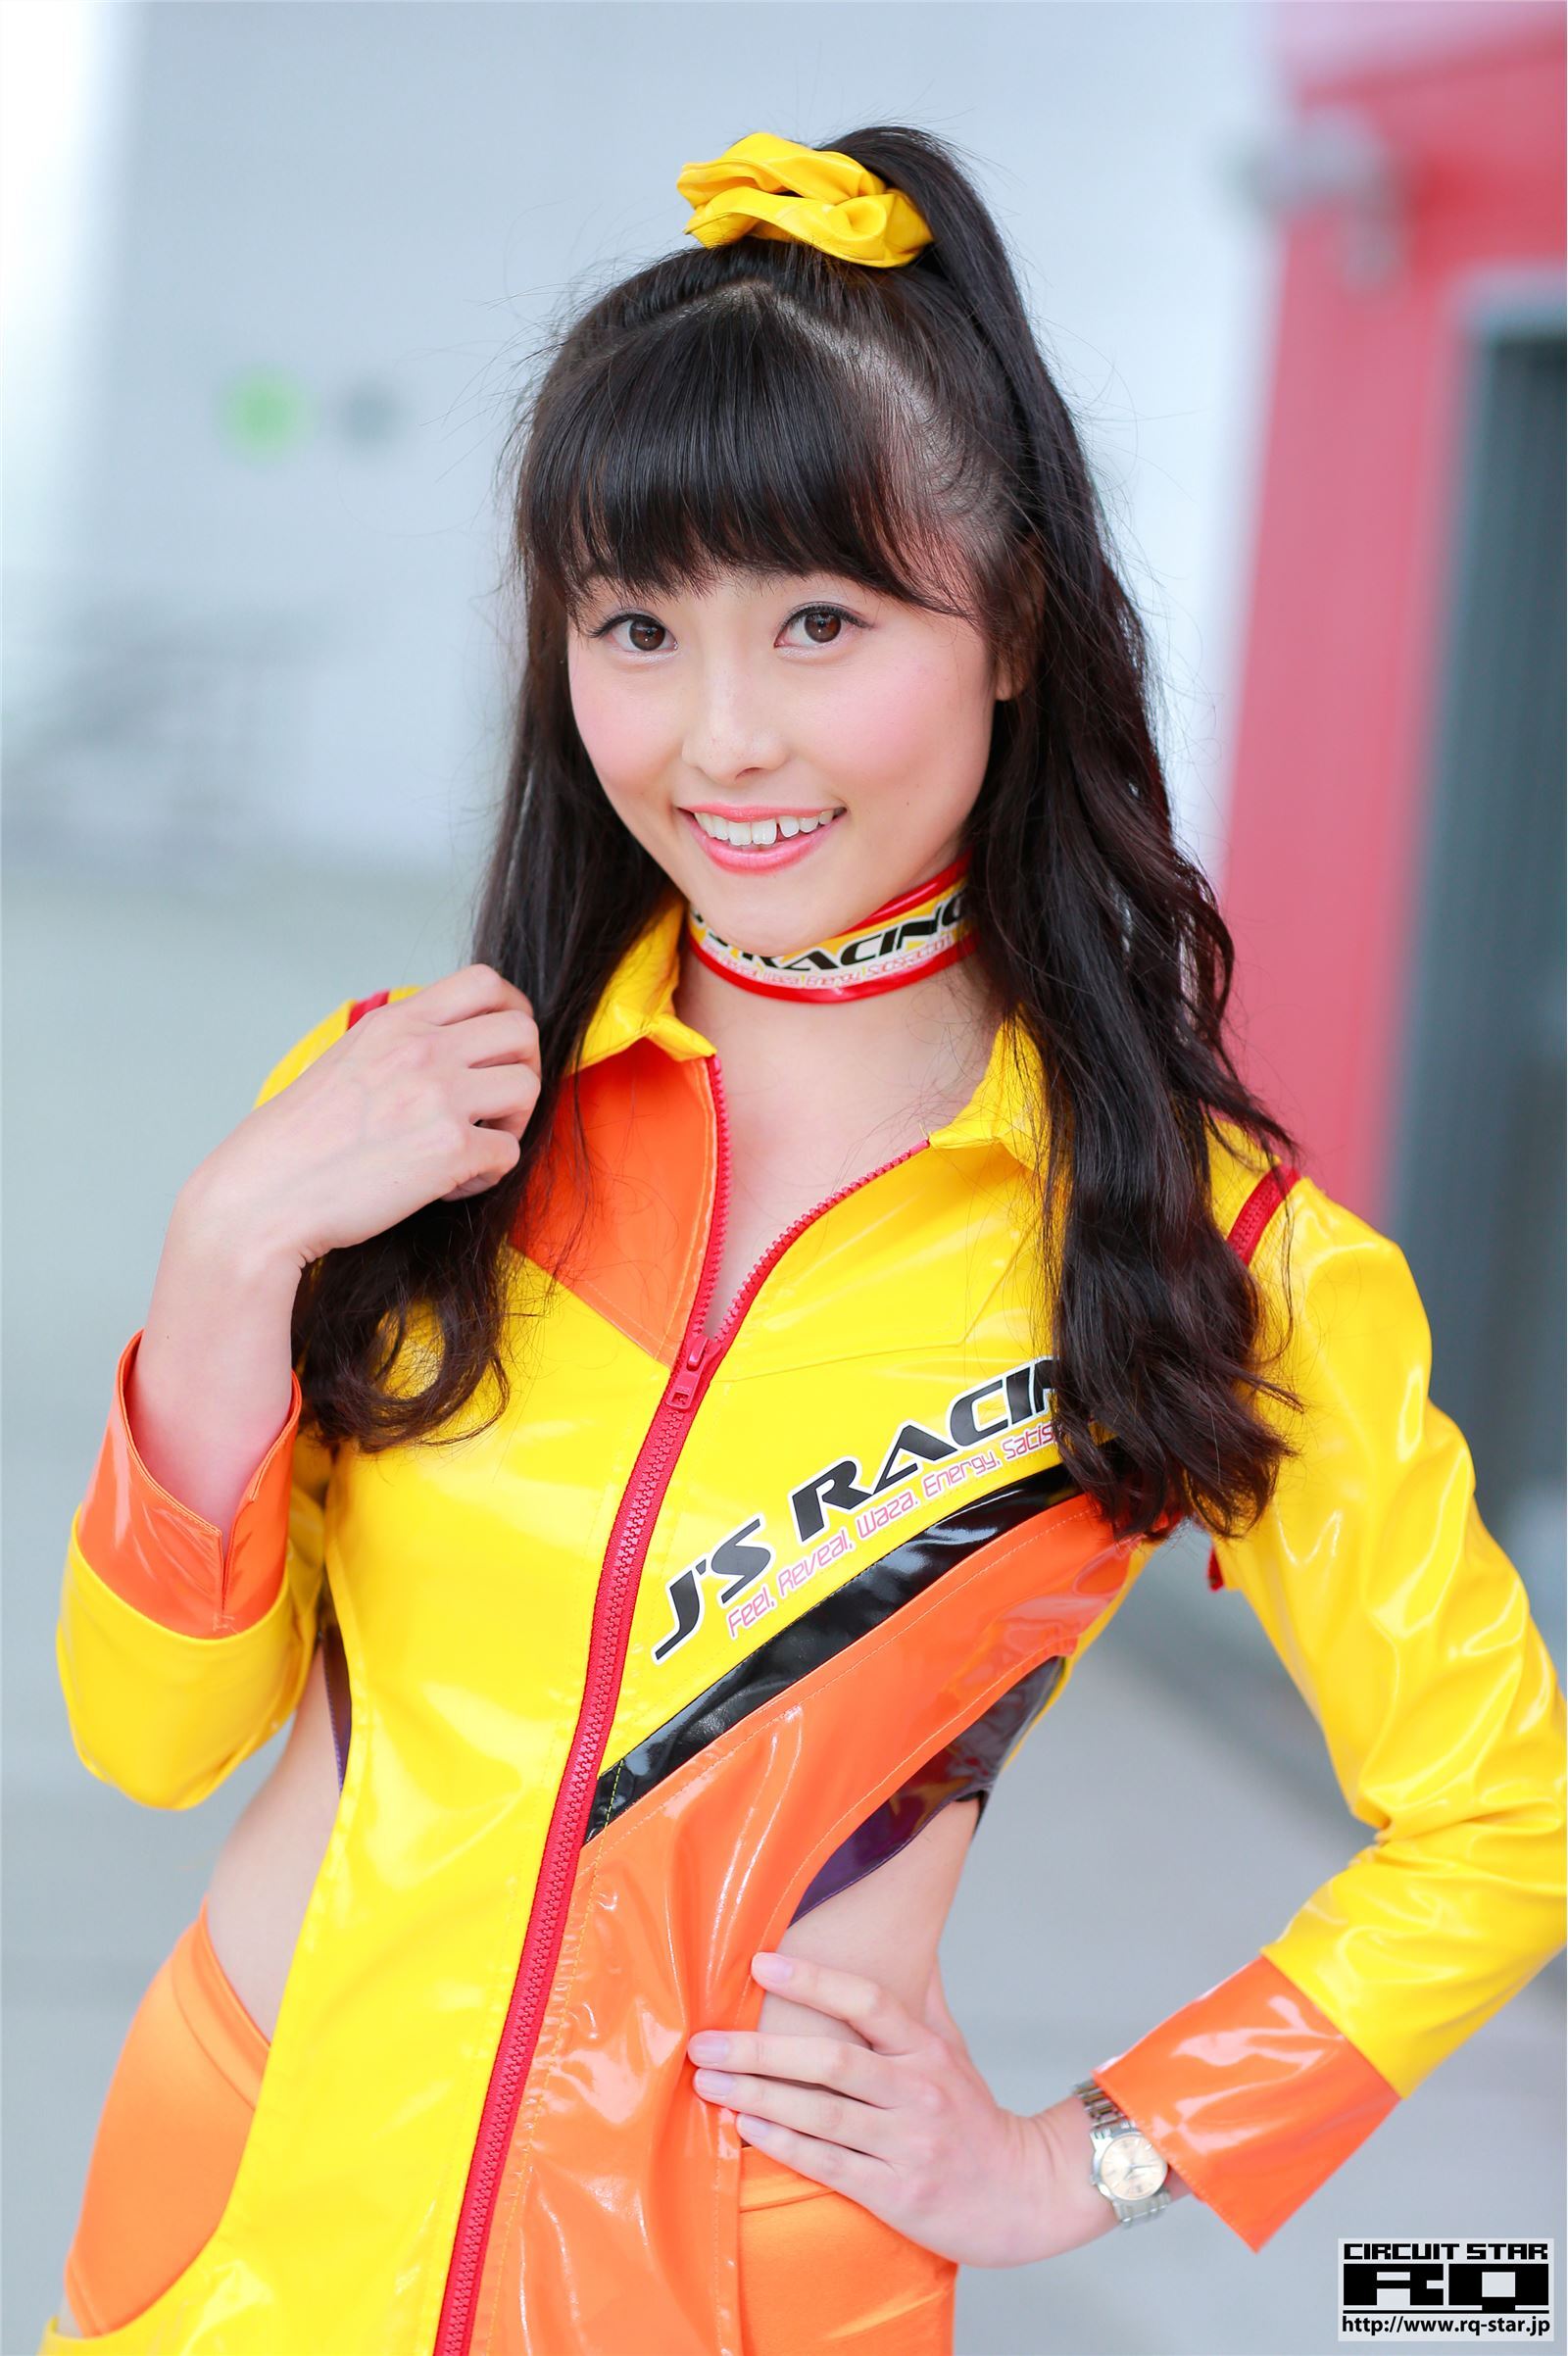 [RQ-STAR]2018.04.20 Tomomi Nagao 長尾朋美 Race Queen